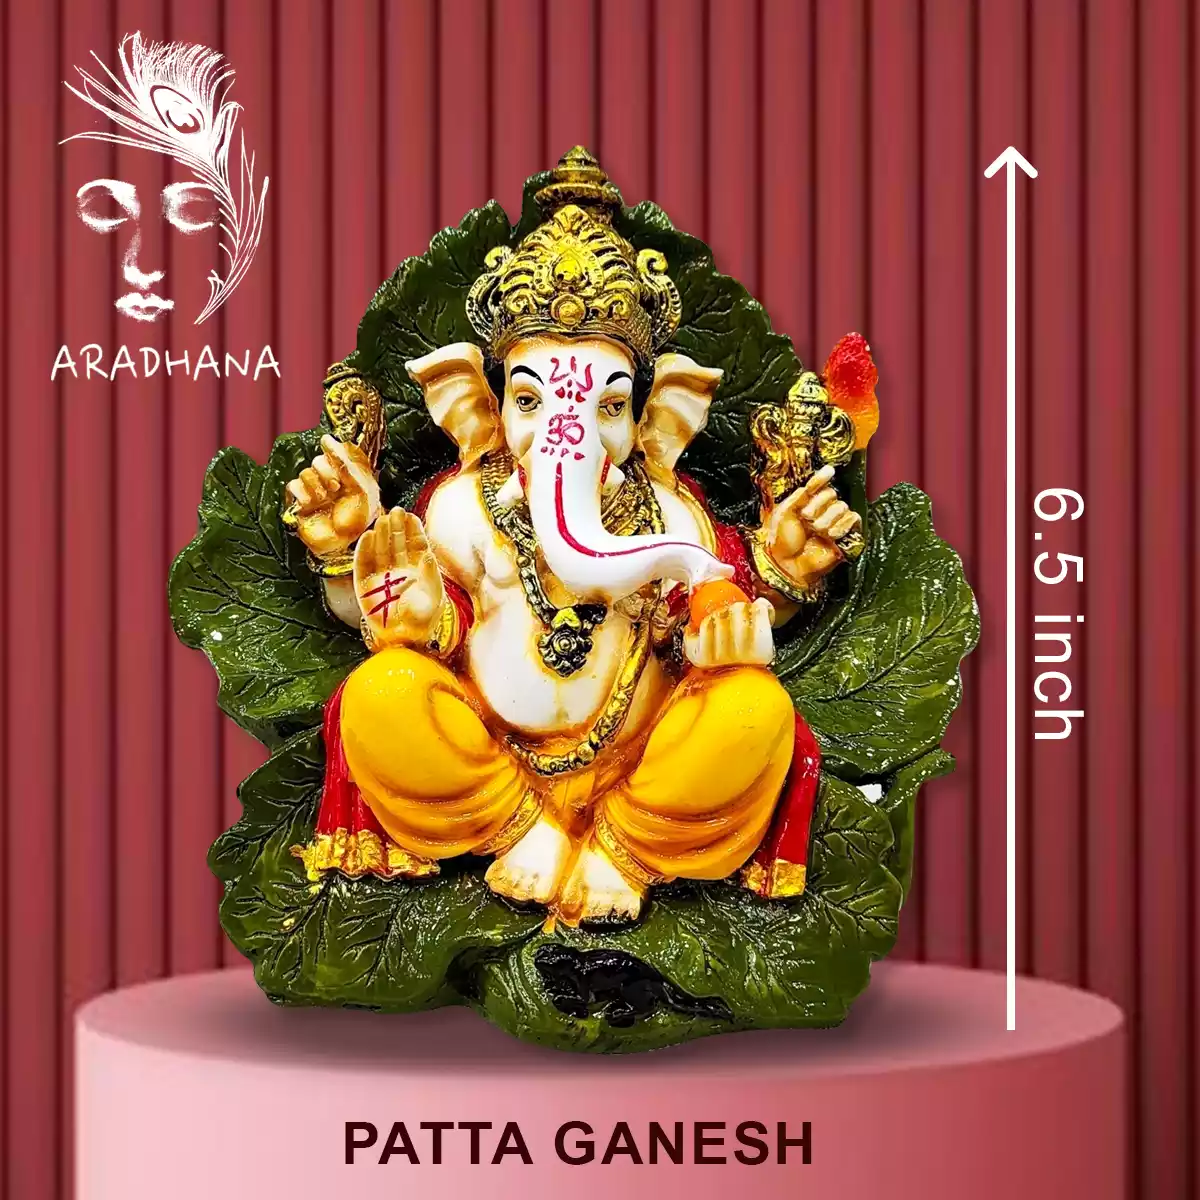 Patta Ganesh